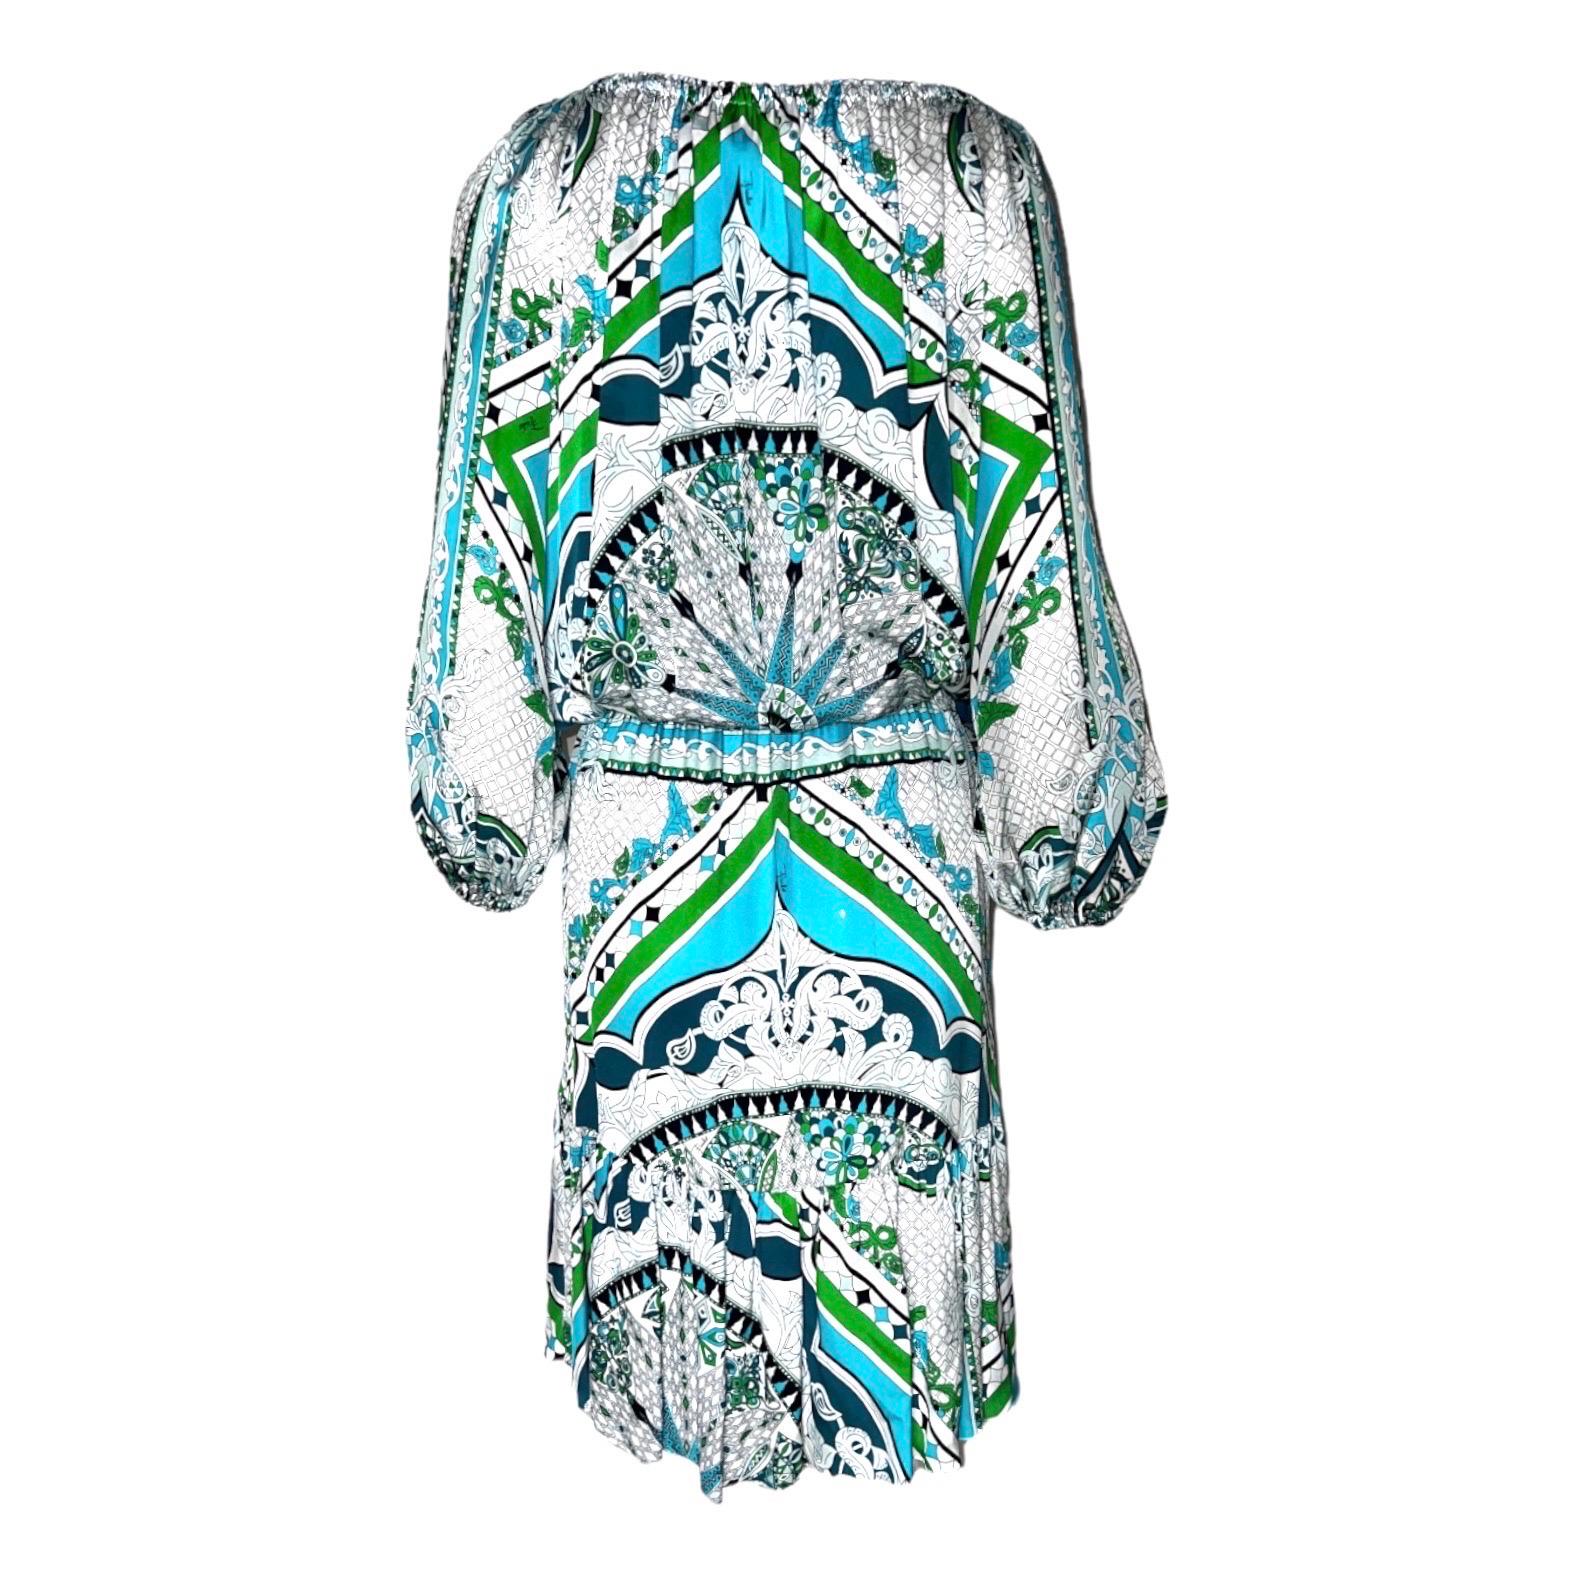 UNWORN Emilio Pucci Signature Silk Print Dress with Tassels 40 In Excellent Condition For Sale In Switzerland, CH